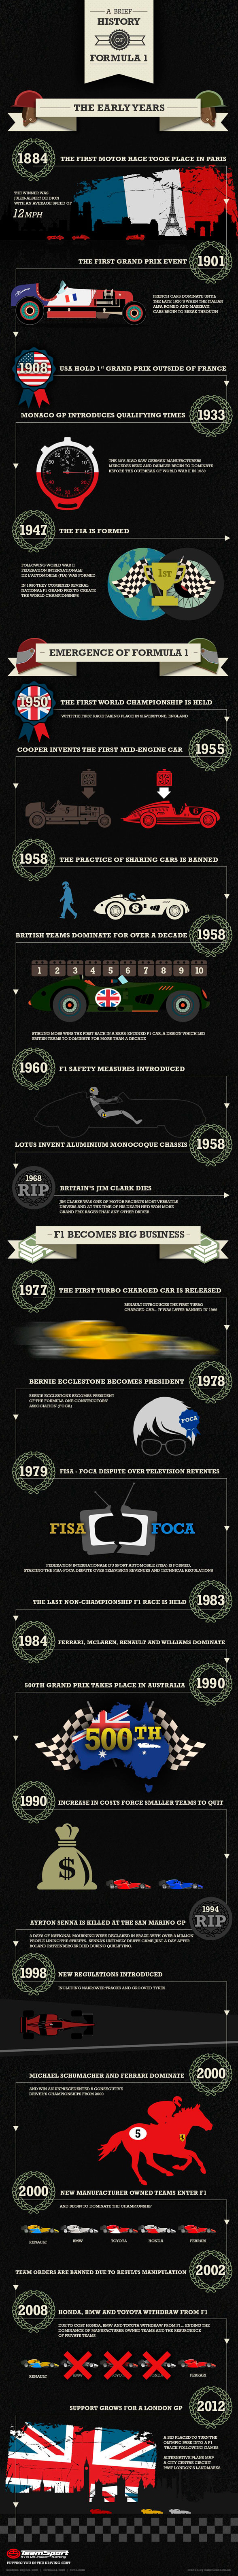 A Brief History of Formula 1